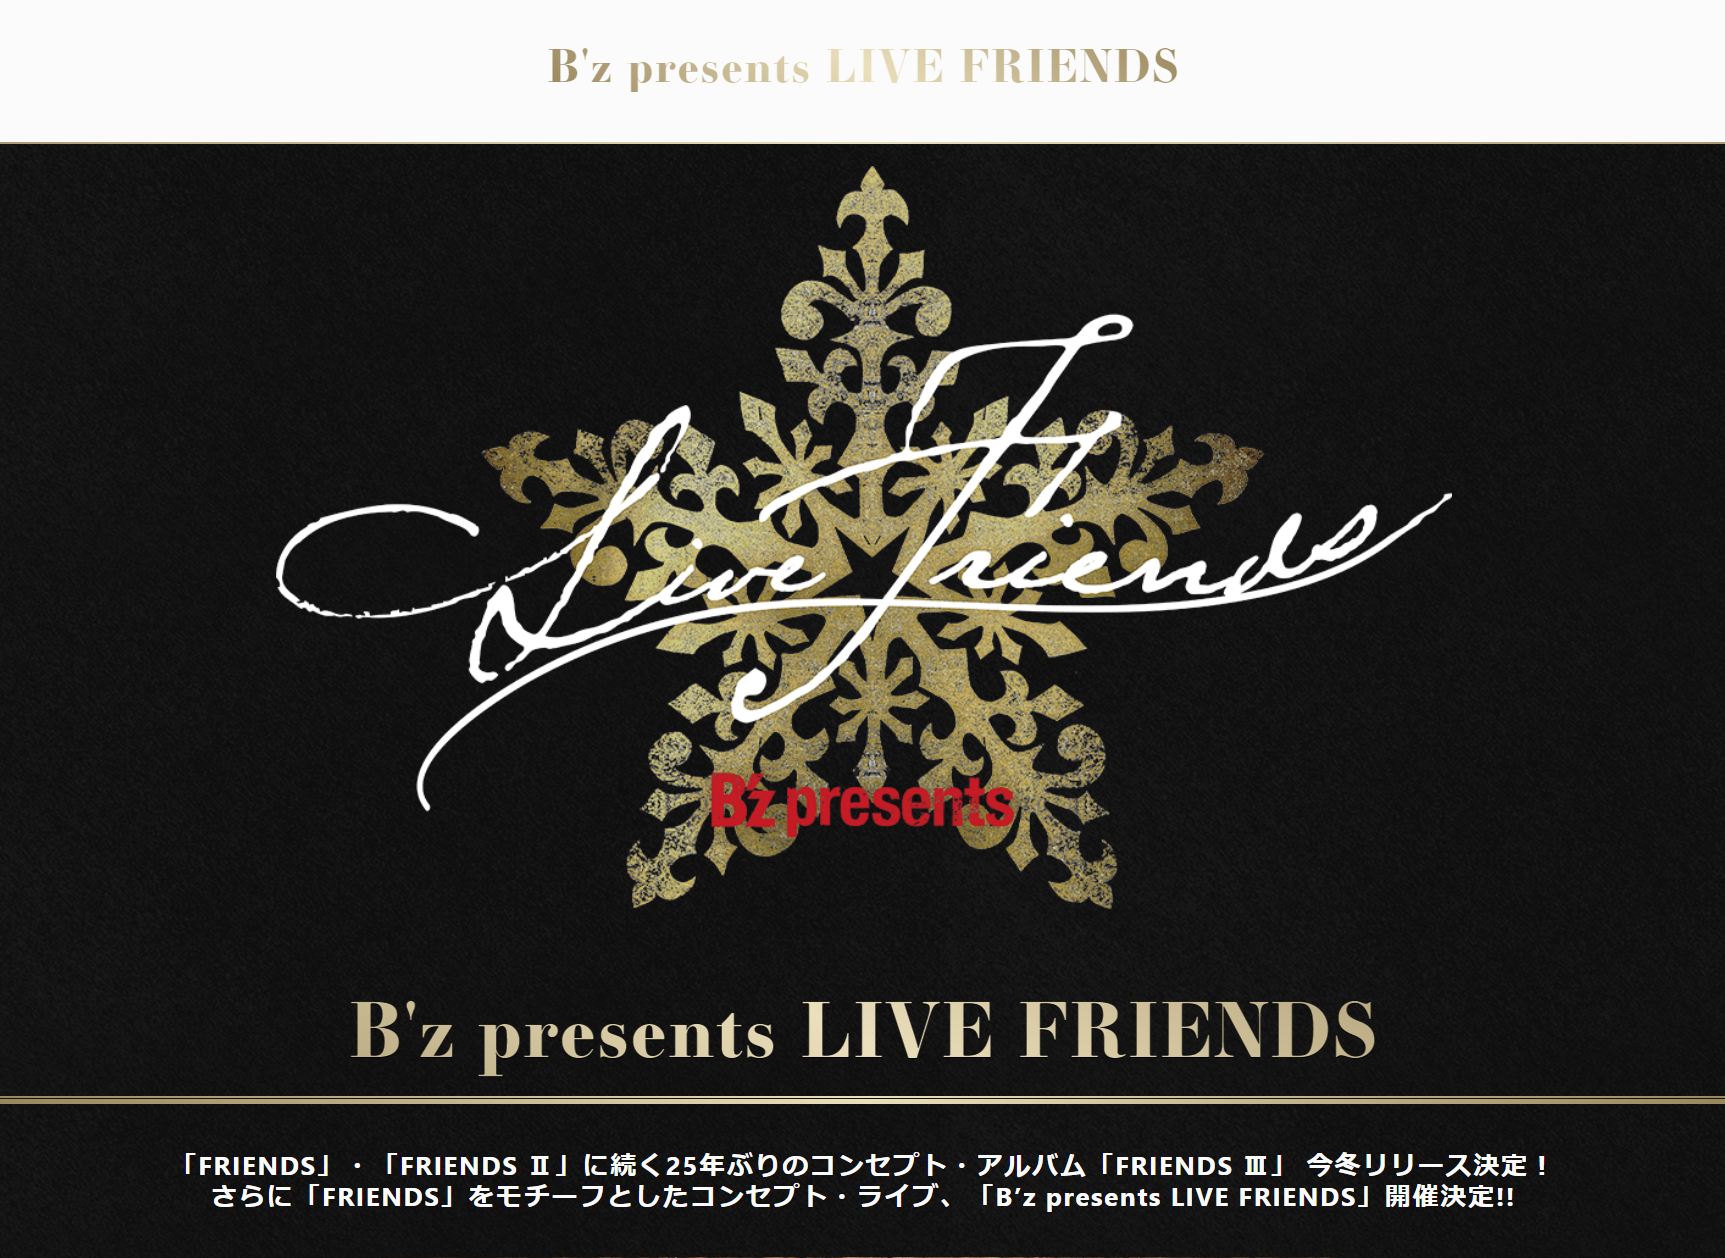 『B'z presents LIVE FRIENDS』の特設サイトのスクショ画像